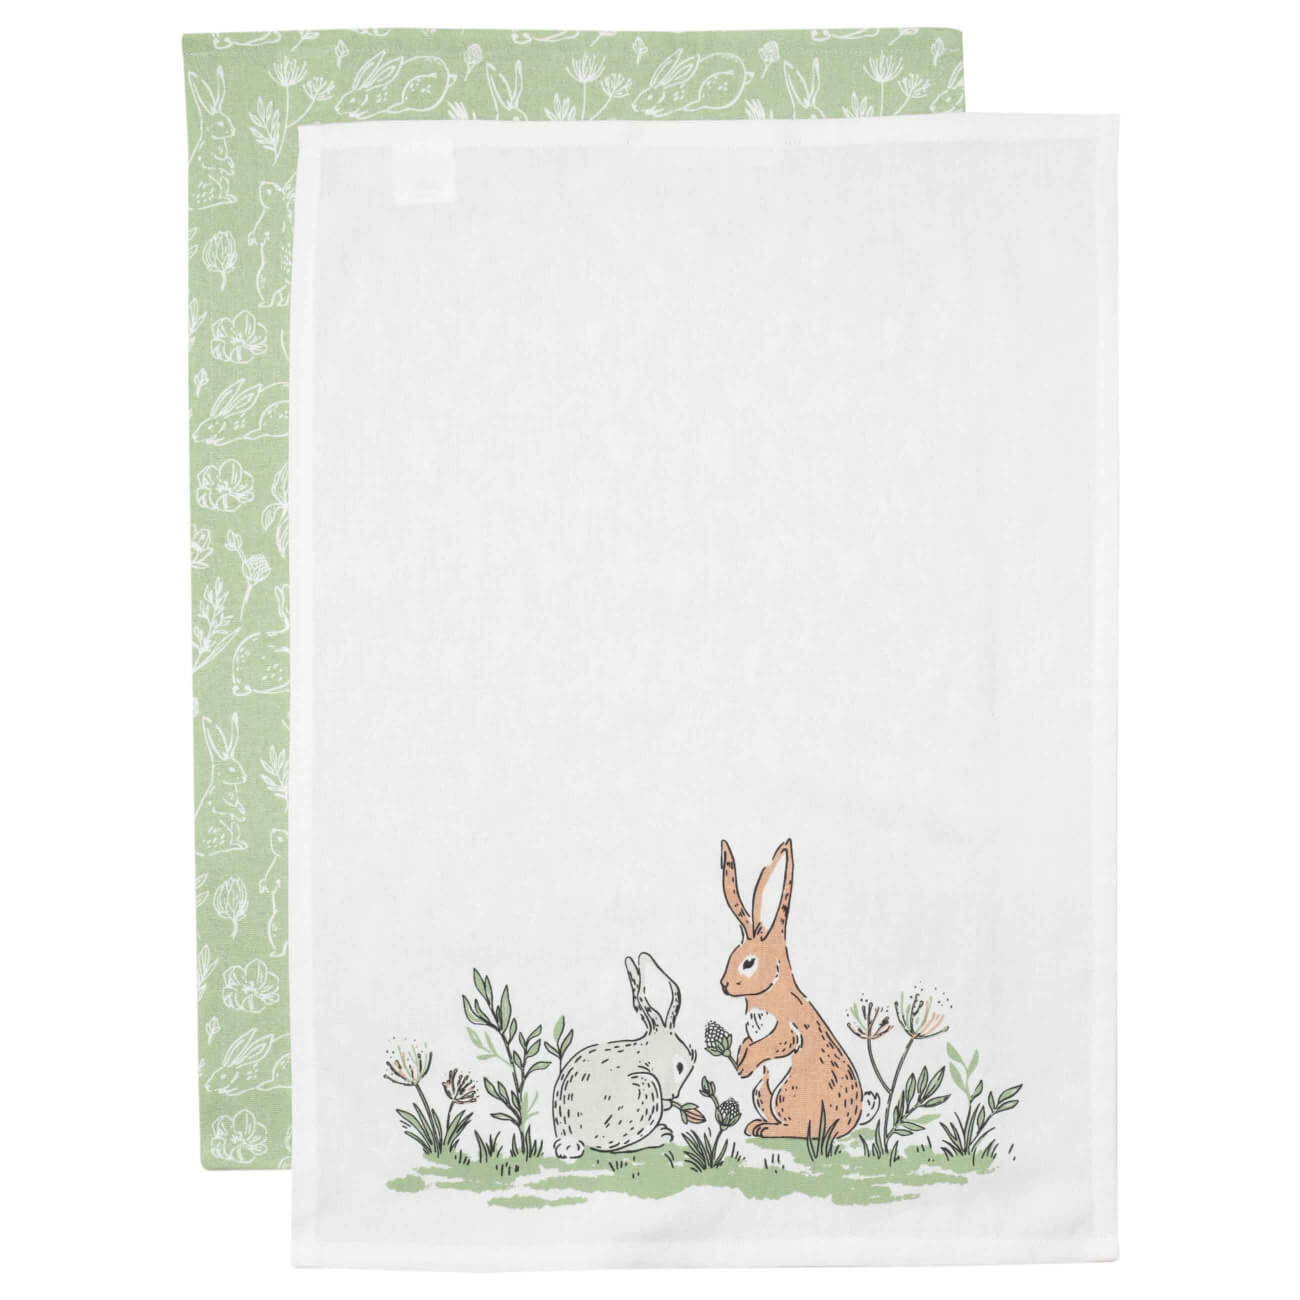 Полотенце кухонное, 40х60 см, 2 шт, хлопок, белое/зеленое, Кролики, Easter полотенце xiaomi zsh youth series 34cm x 76cm белое